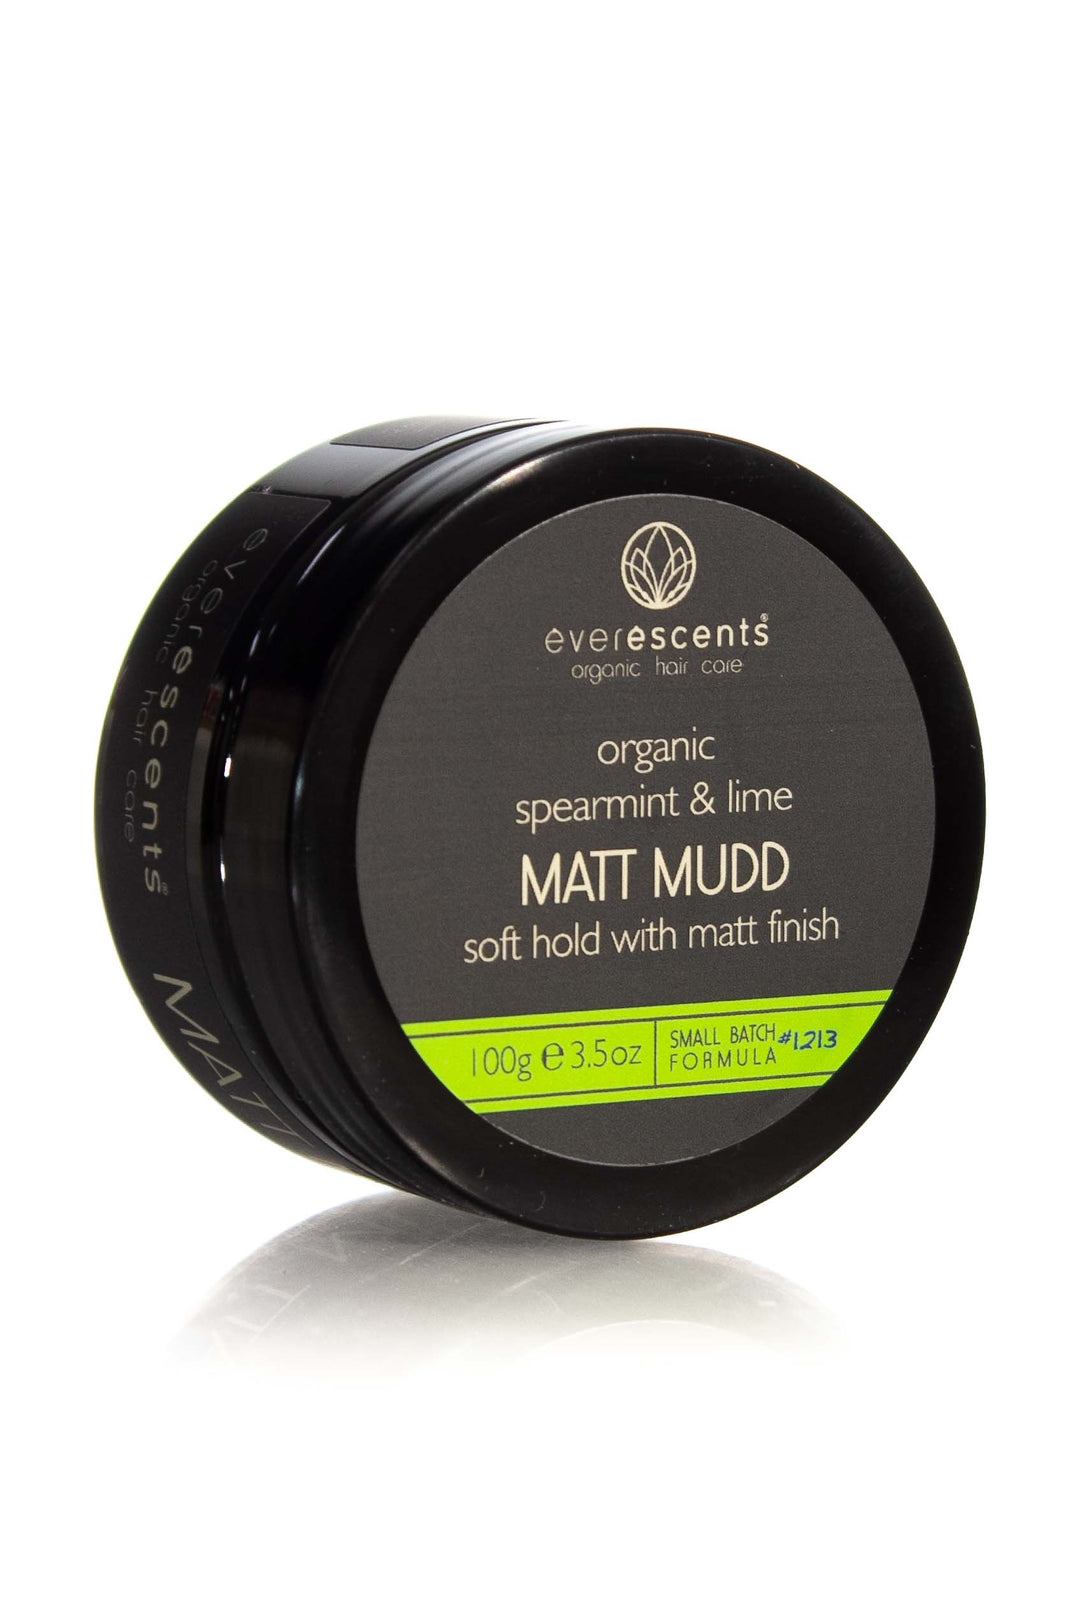 EVERESCENTS Organic Spearmint & Lime Matt Mudd | 100g